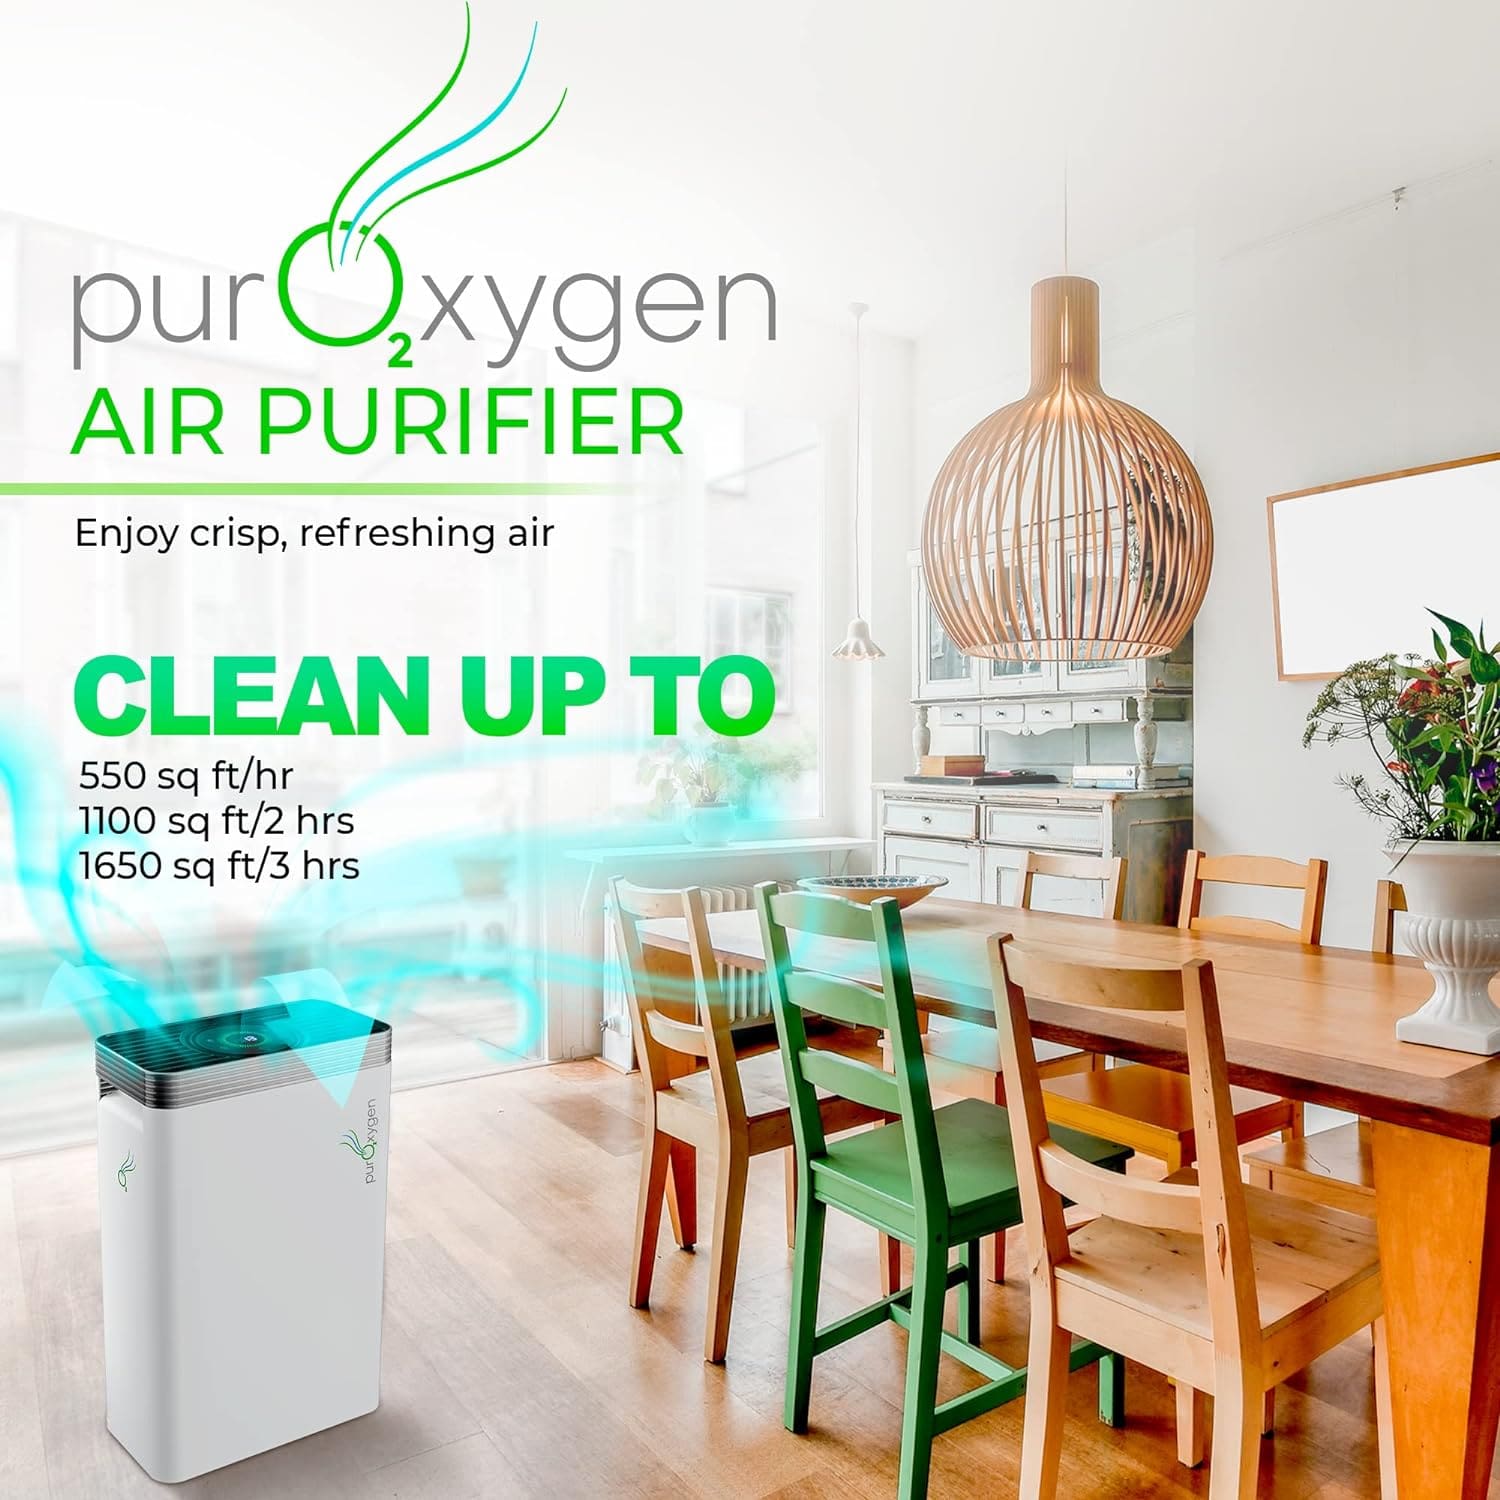 puro2xygen p500i air purifier review